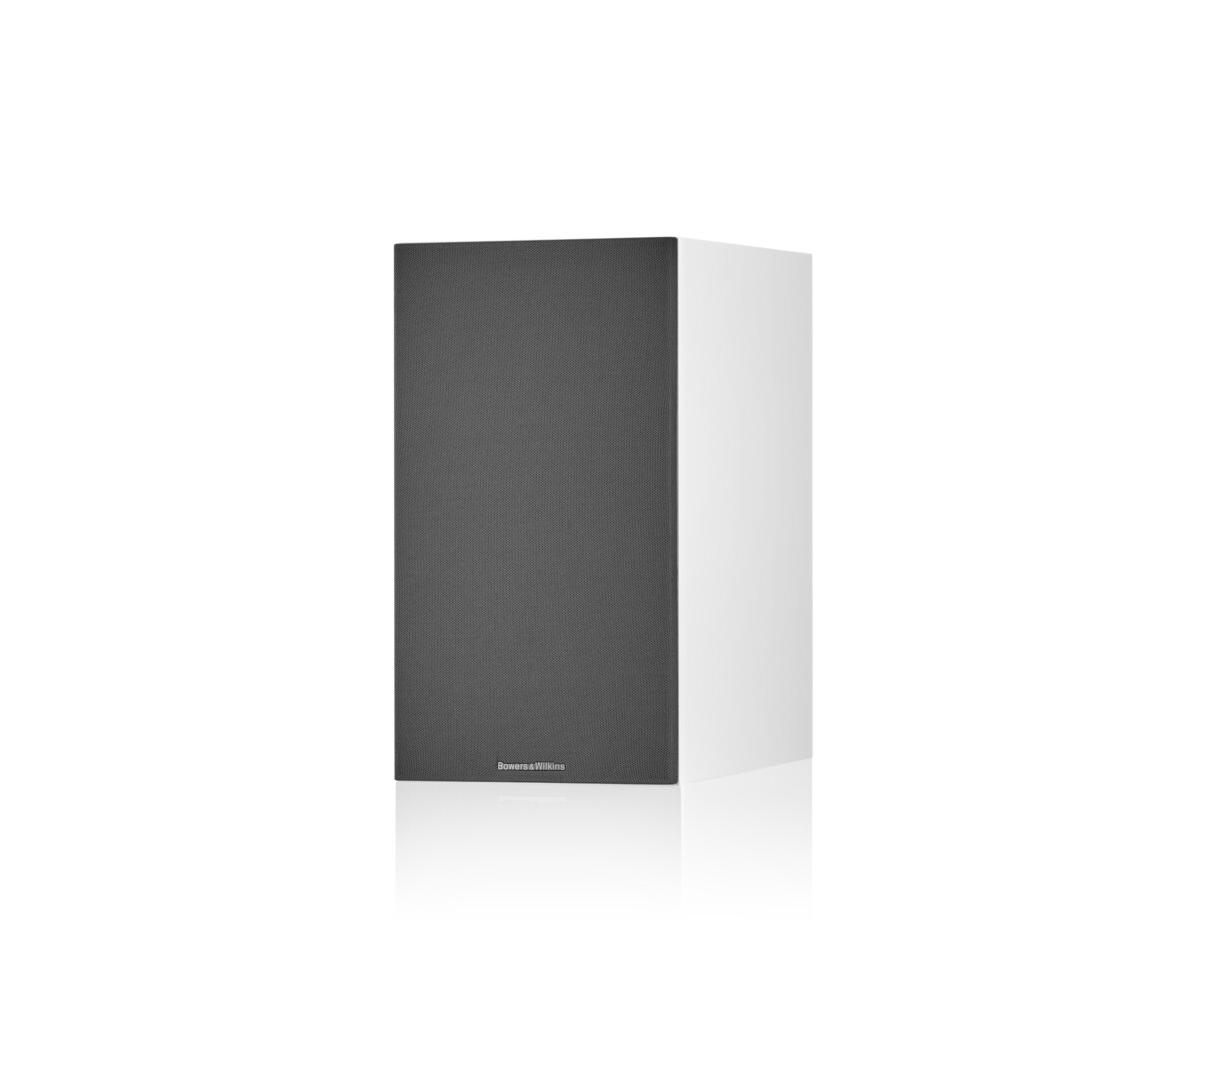 Bowers & Wilkins 606 S3 (Black) Bookshelf speakers at Crutchfield